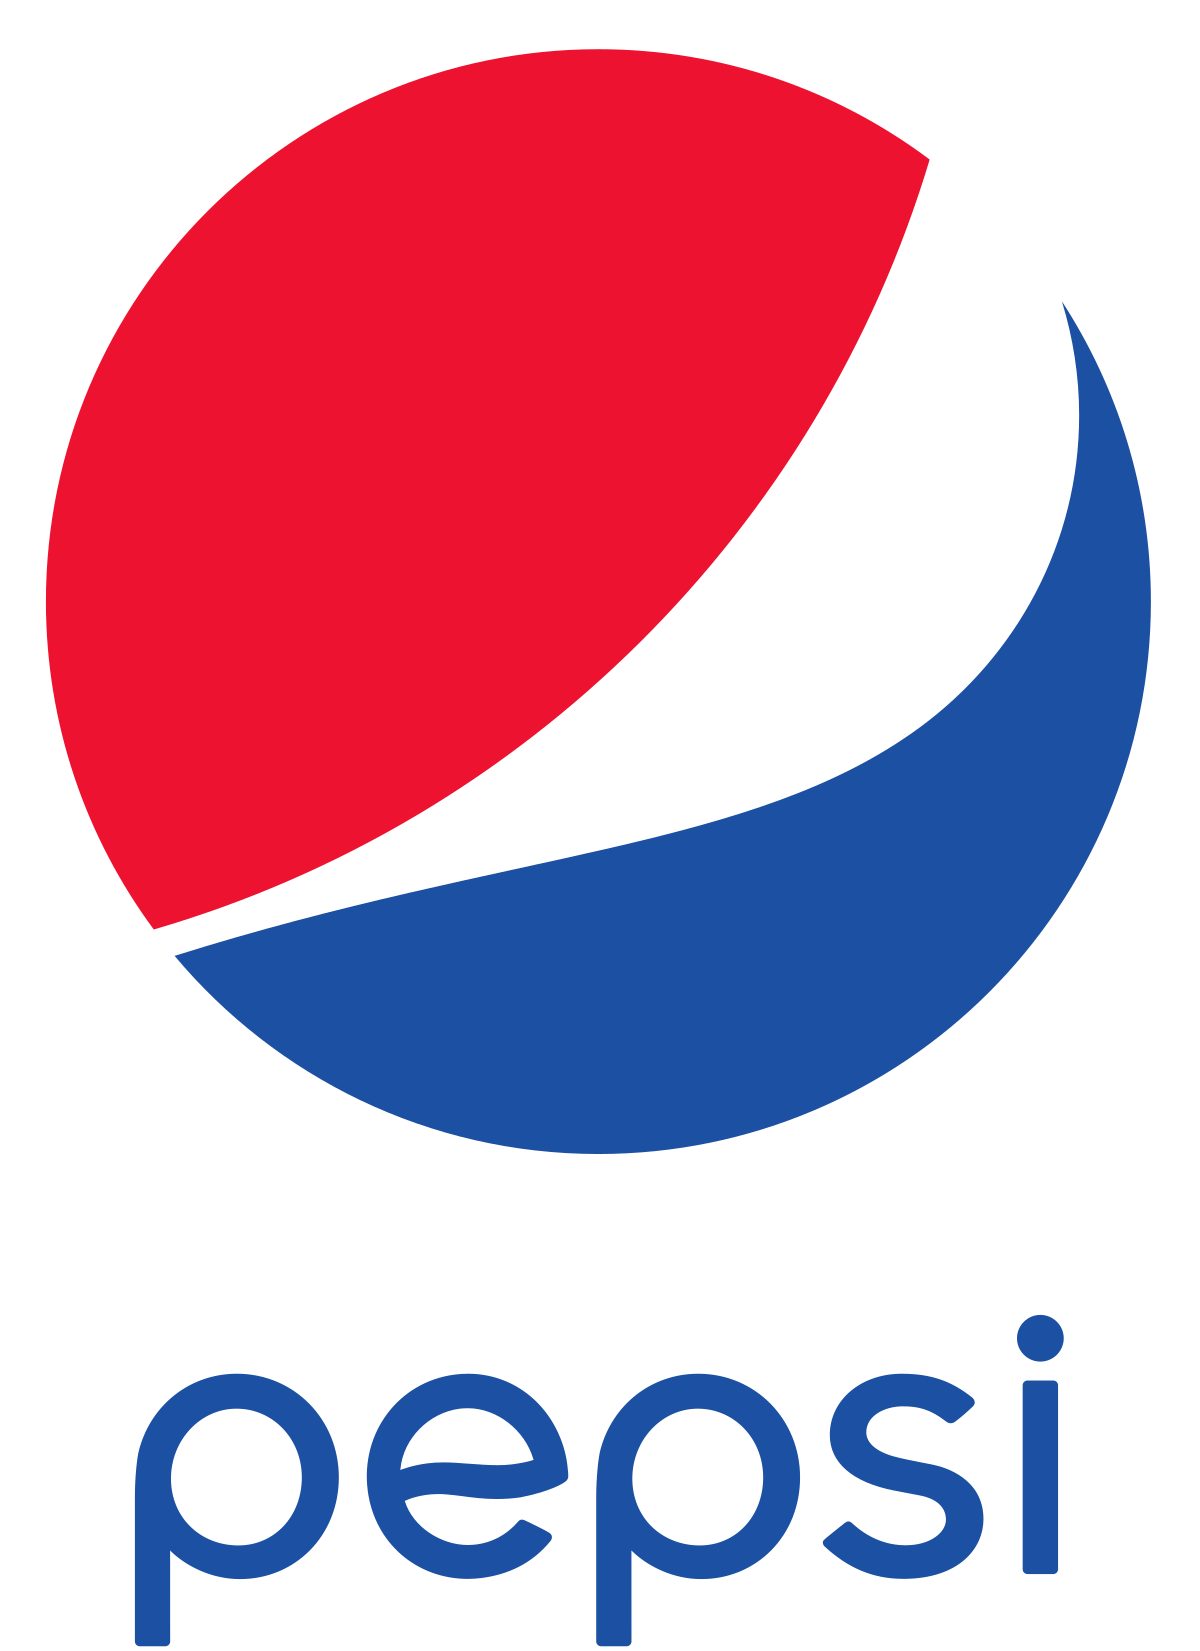 Pepsi_logo_2014